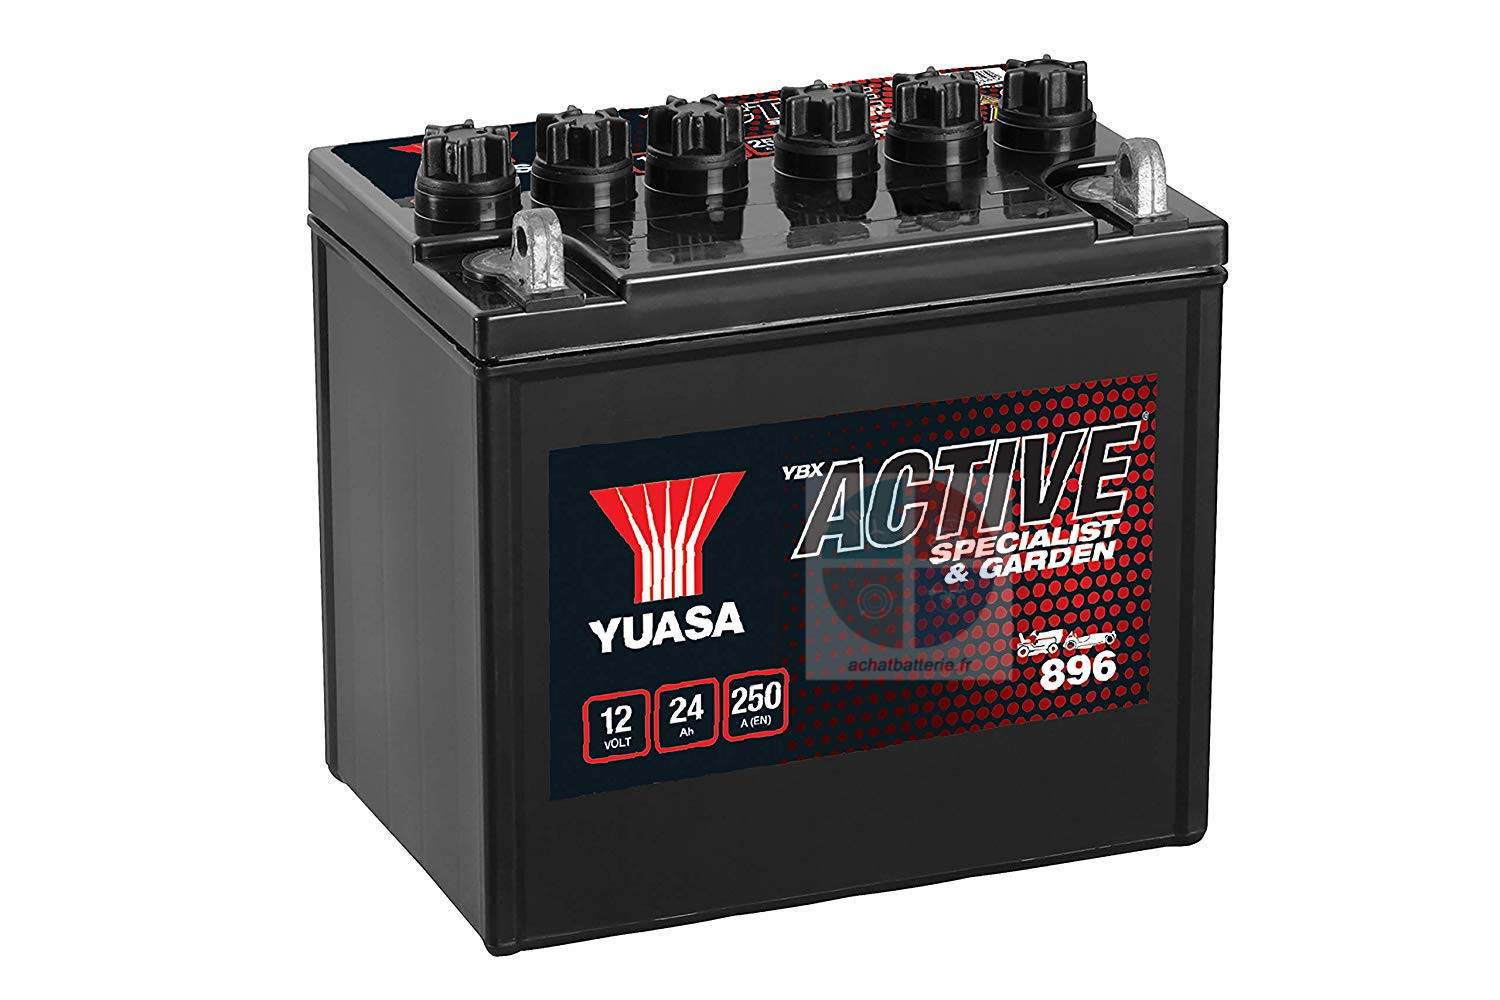 Batterie tondeuse 12N24-4A 12v 26ah 250A Yuasa Garden U1-9 +Gauche 896